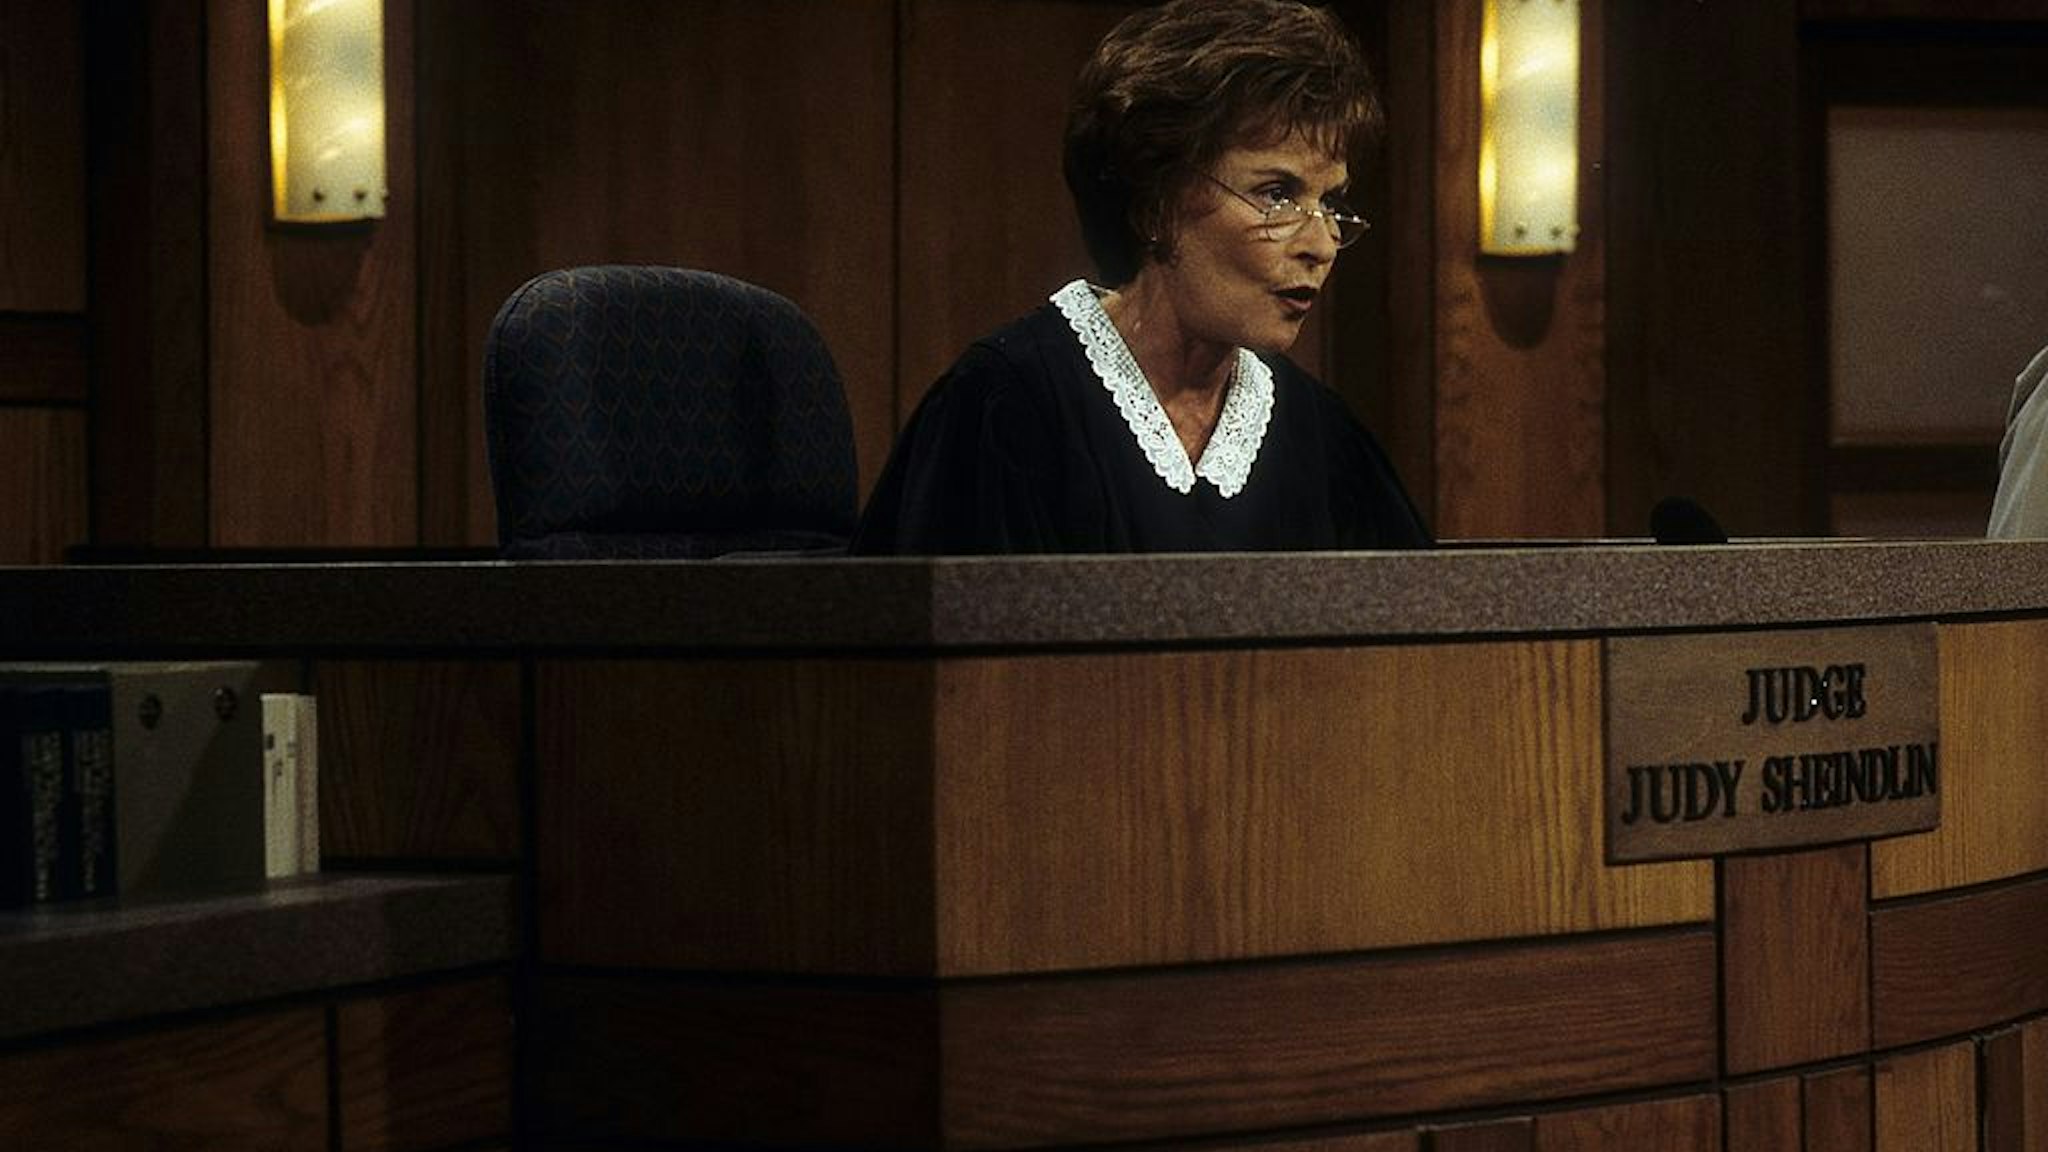 Judge Judy, Judith Sheindlin, on Set on February 14. 1997 in Los Angeles, California.